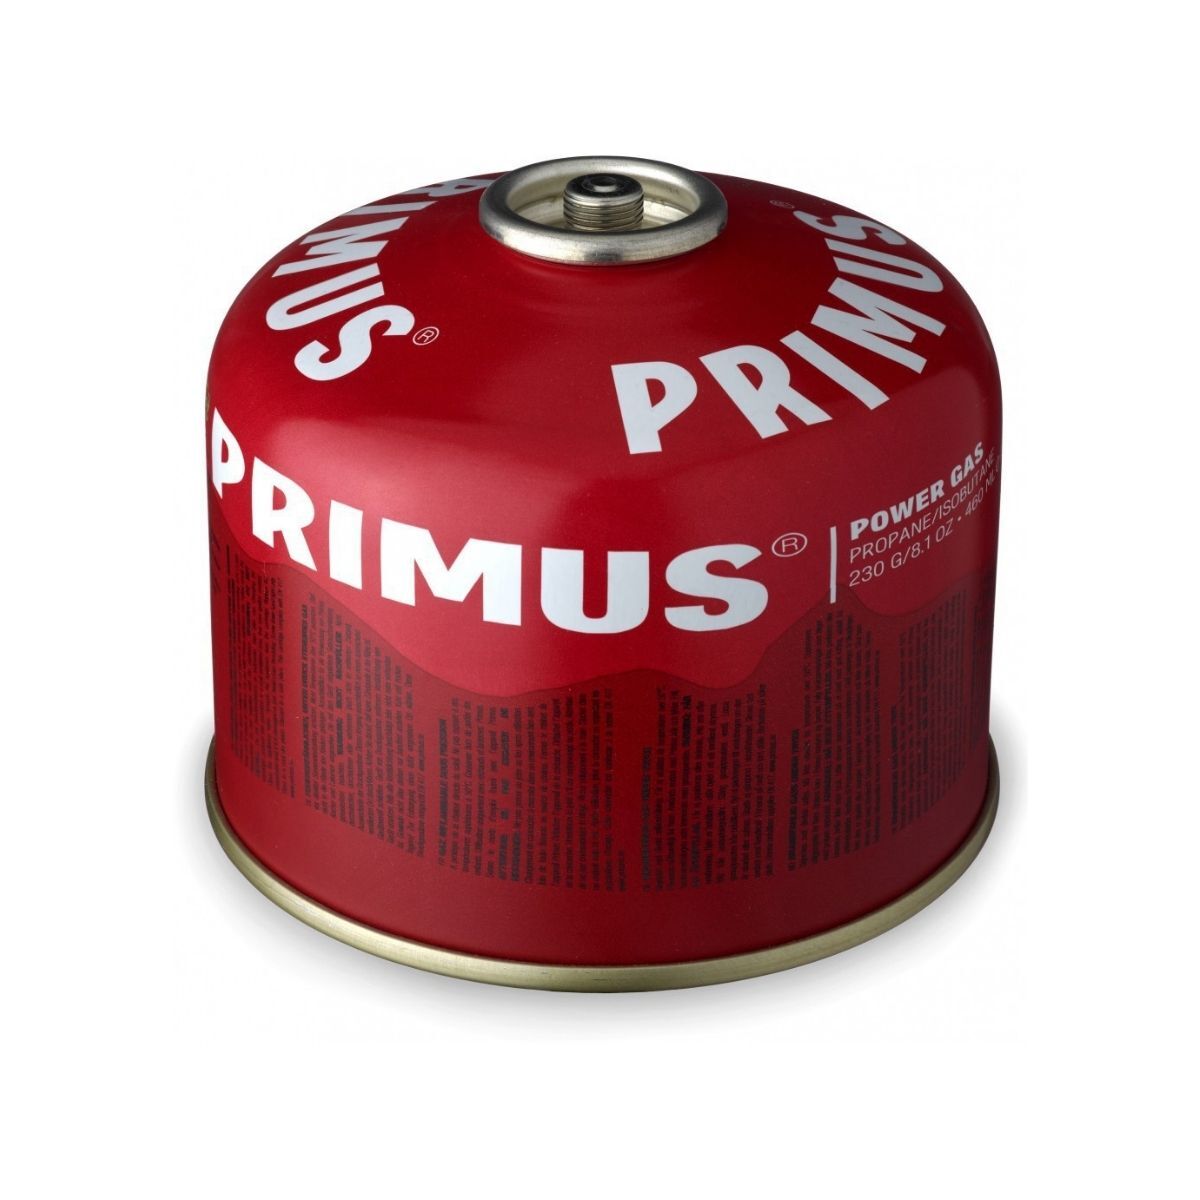 Primus Power Gas 230 g L1 - Gaspatron